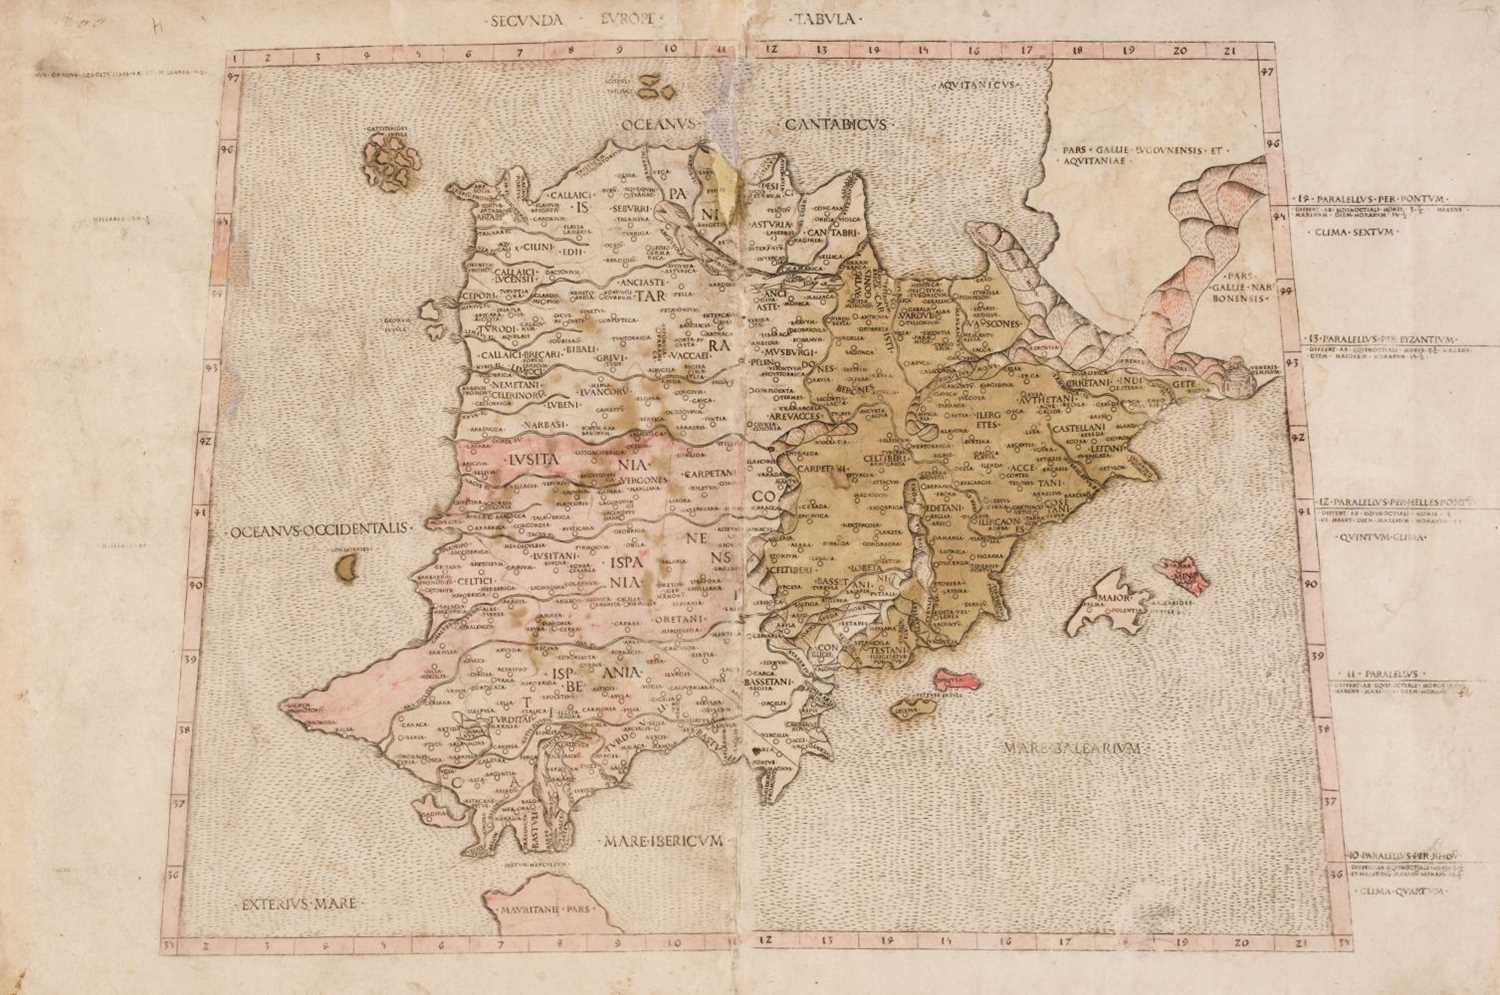 Lot 205 - Spain & Portugal. Ptolemy (Claudius), Secunda Europe Tabula, Rome  [1478 - 1509]